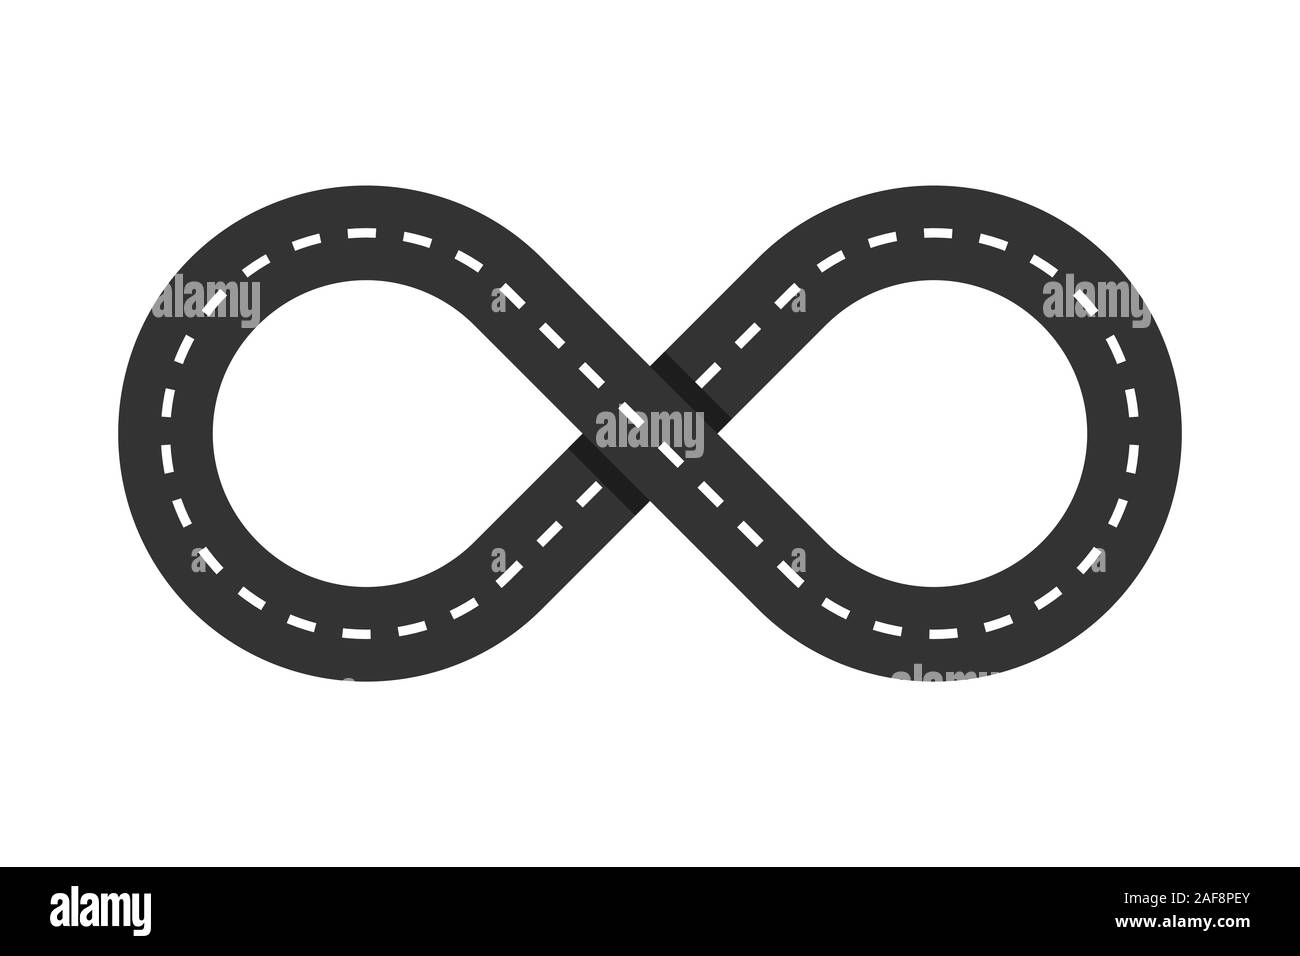 Infinity road loop icon. Infinity symbol. Figure 8 Traffic Loop. Race track sign or logo. Highway intersection or interchange. Eternal shape. Vector. Stock Vector